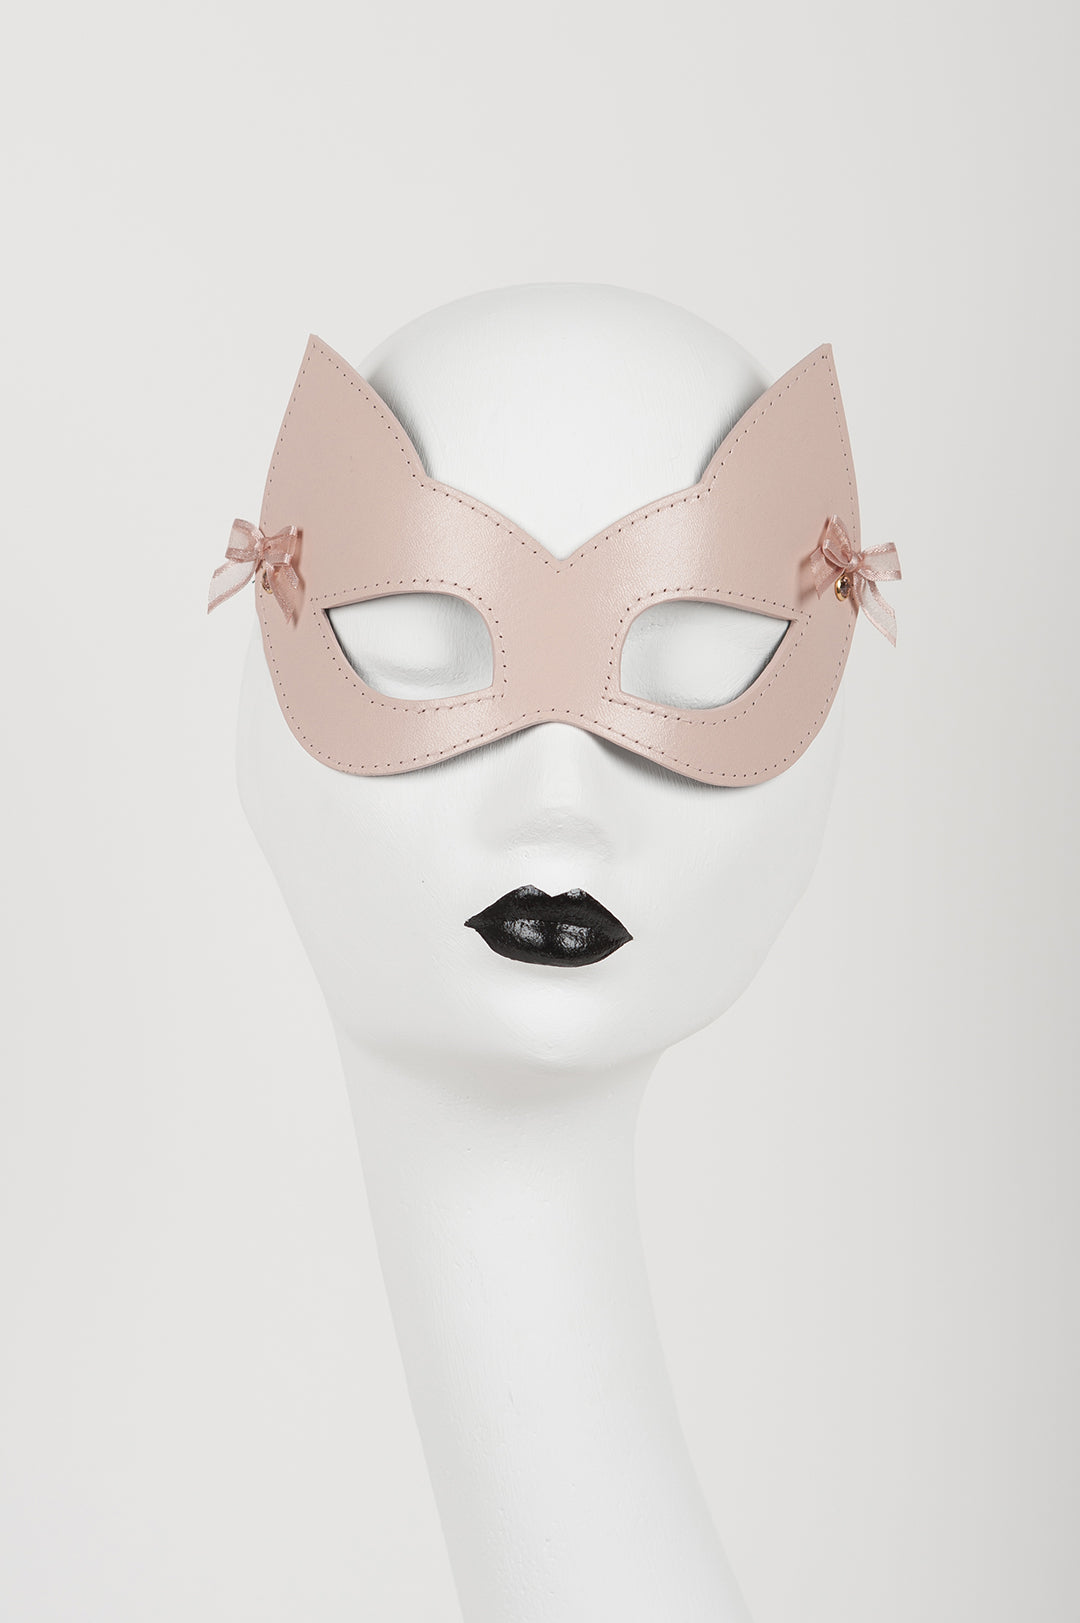 Chérie Kitten Mask